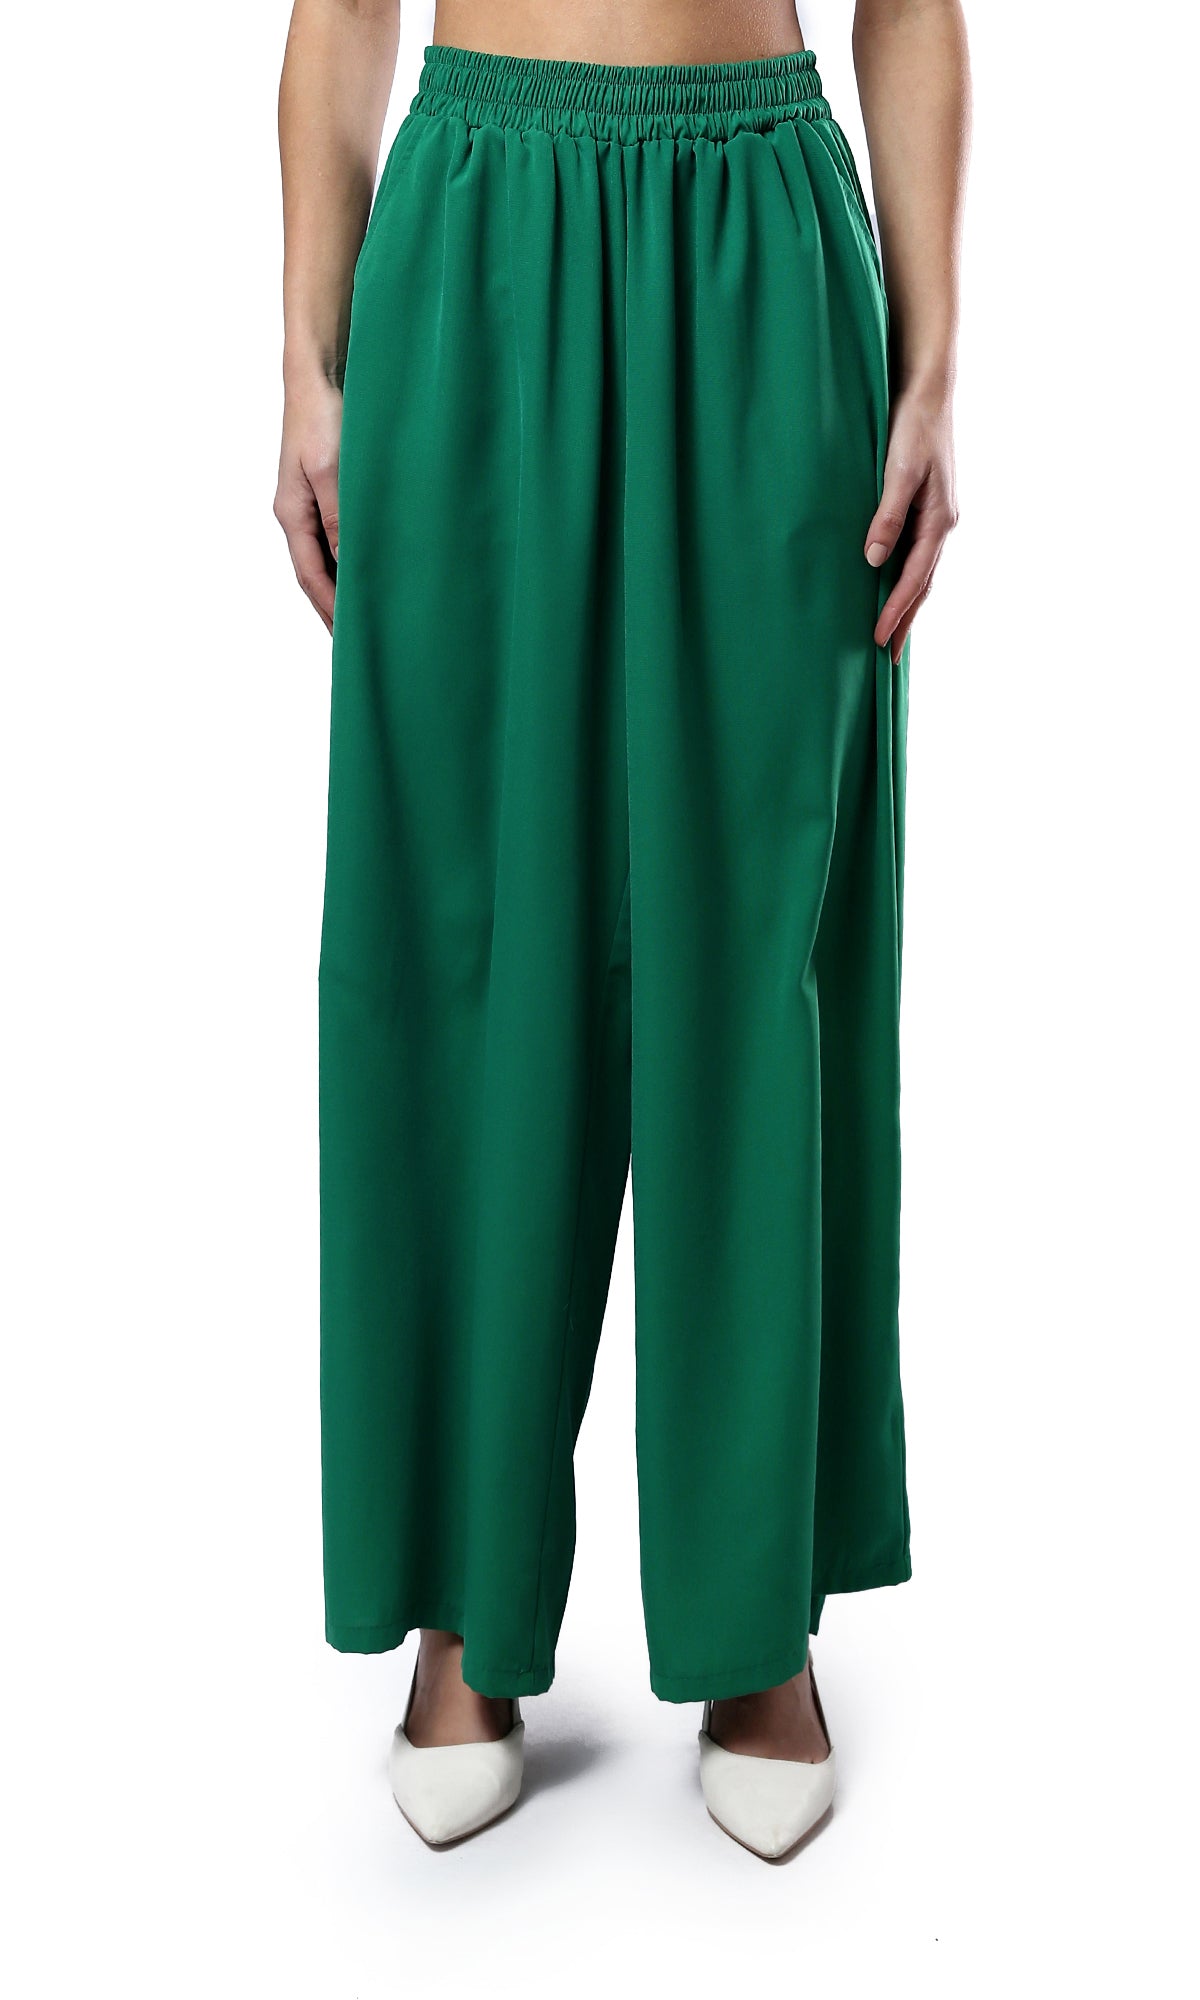 O179826 Elastic Waist Slip On Green Wide Pants